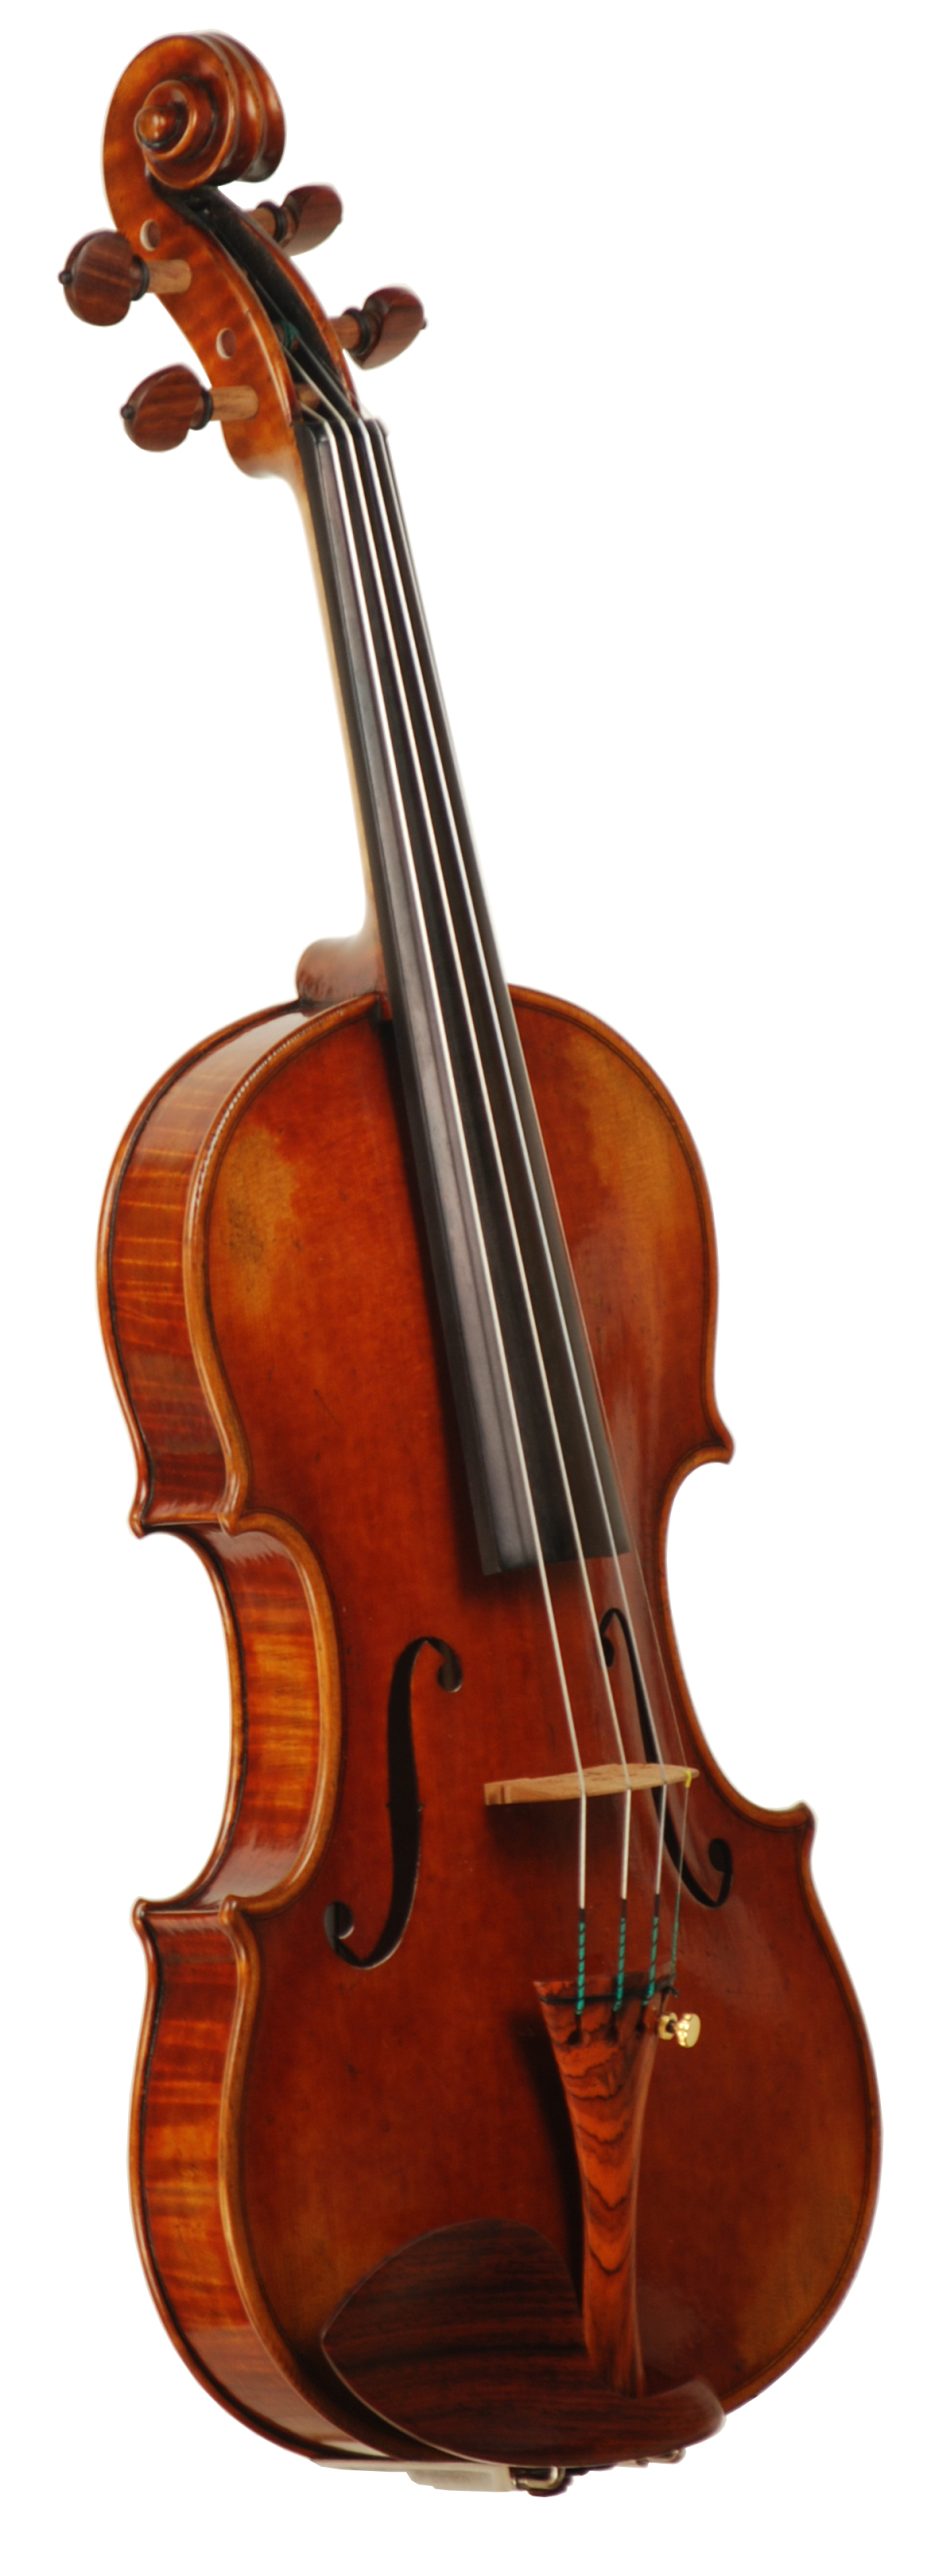 Jay Haide à l'ancienne- Special Model European Tone Woods Violin 